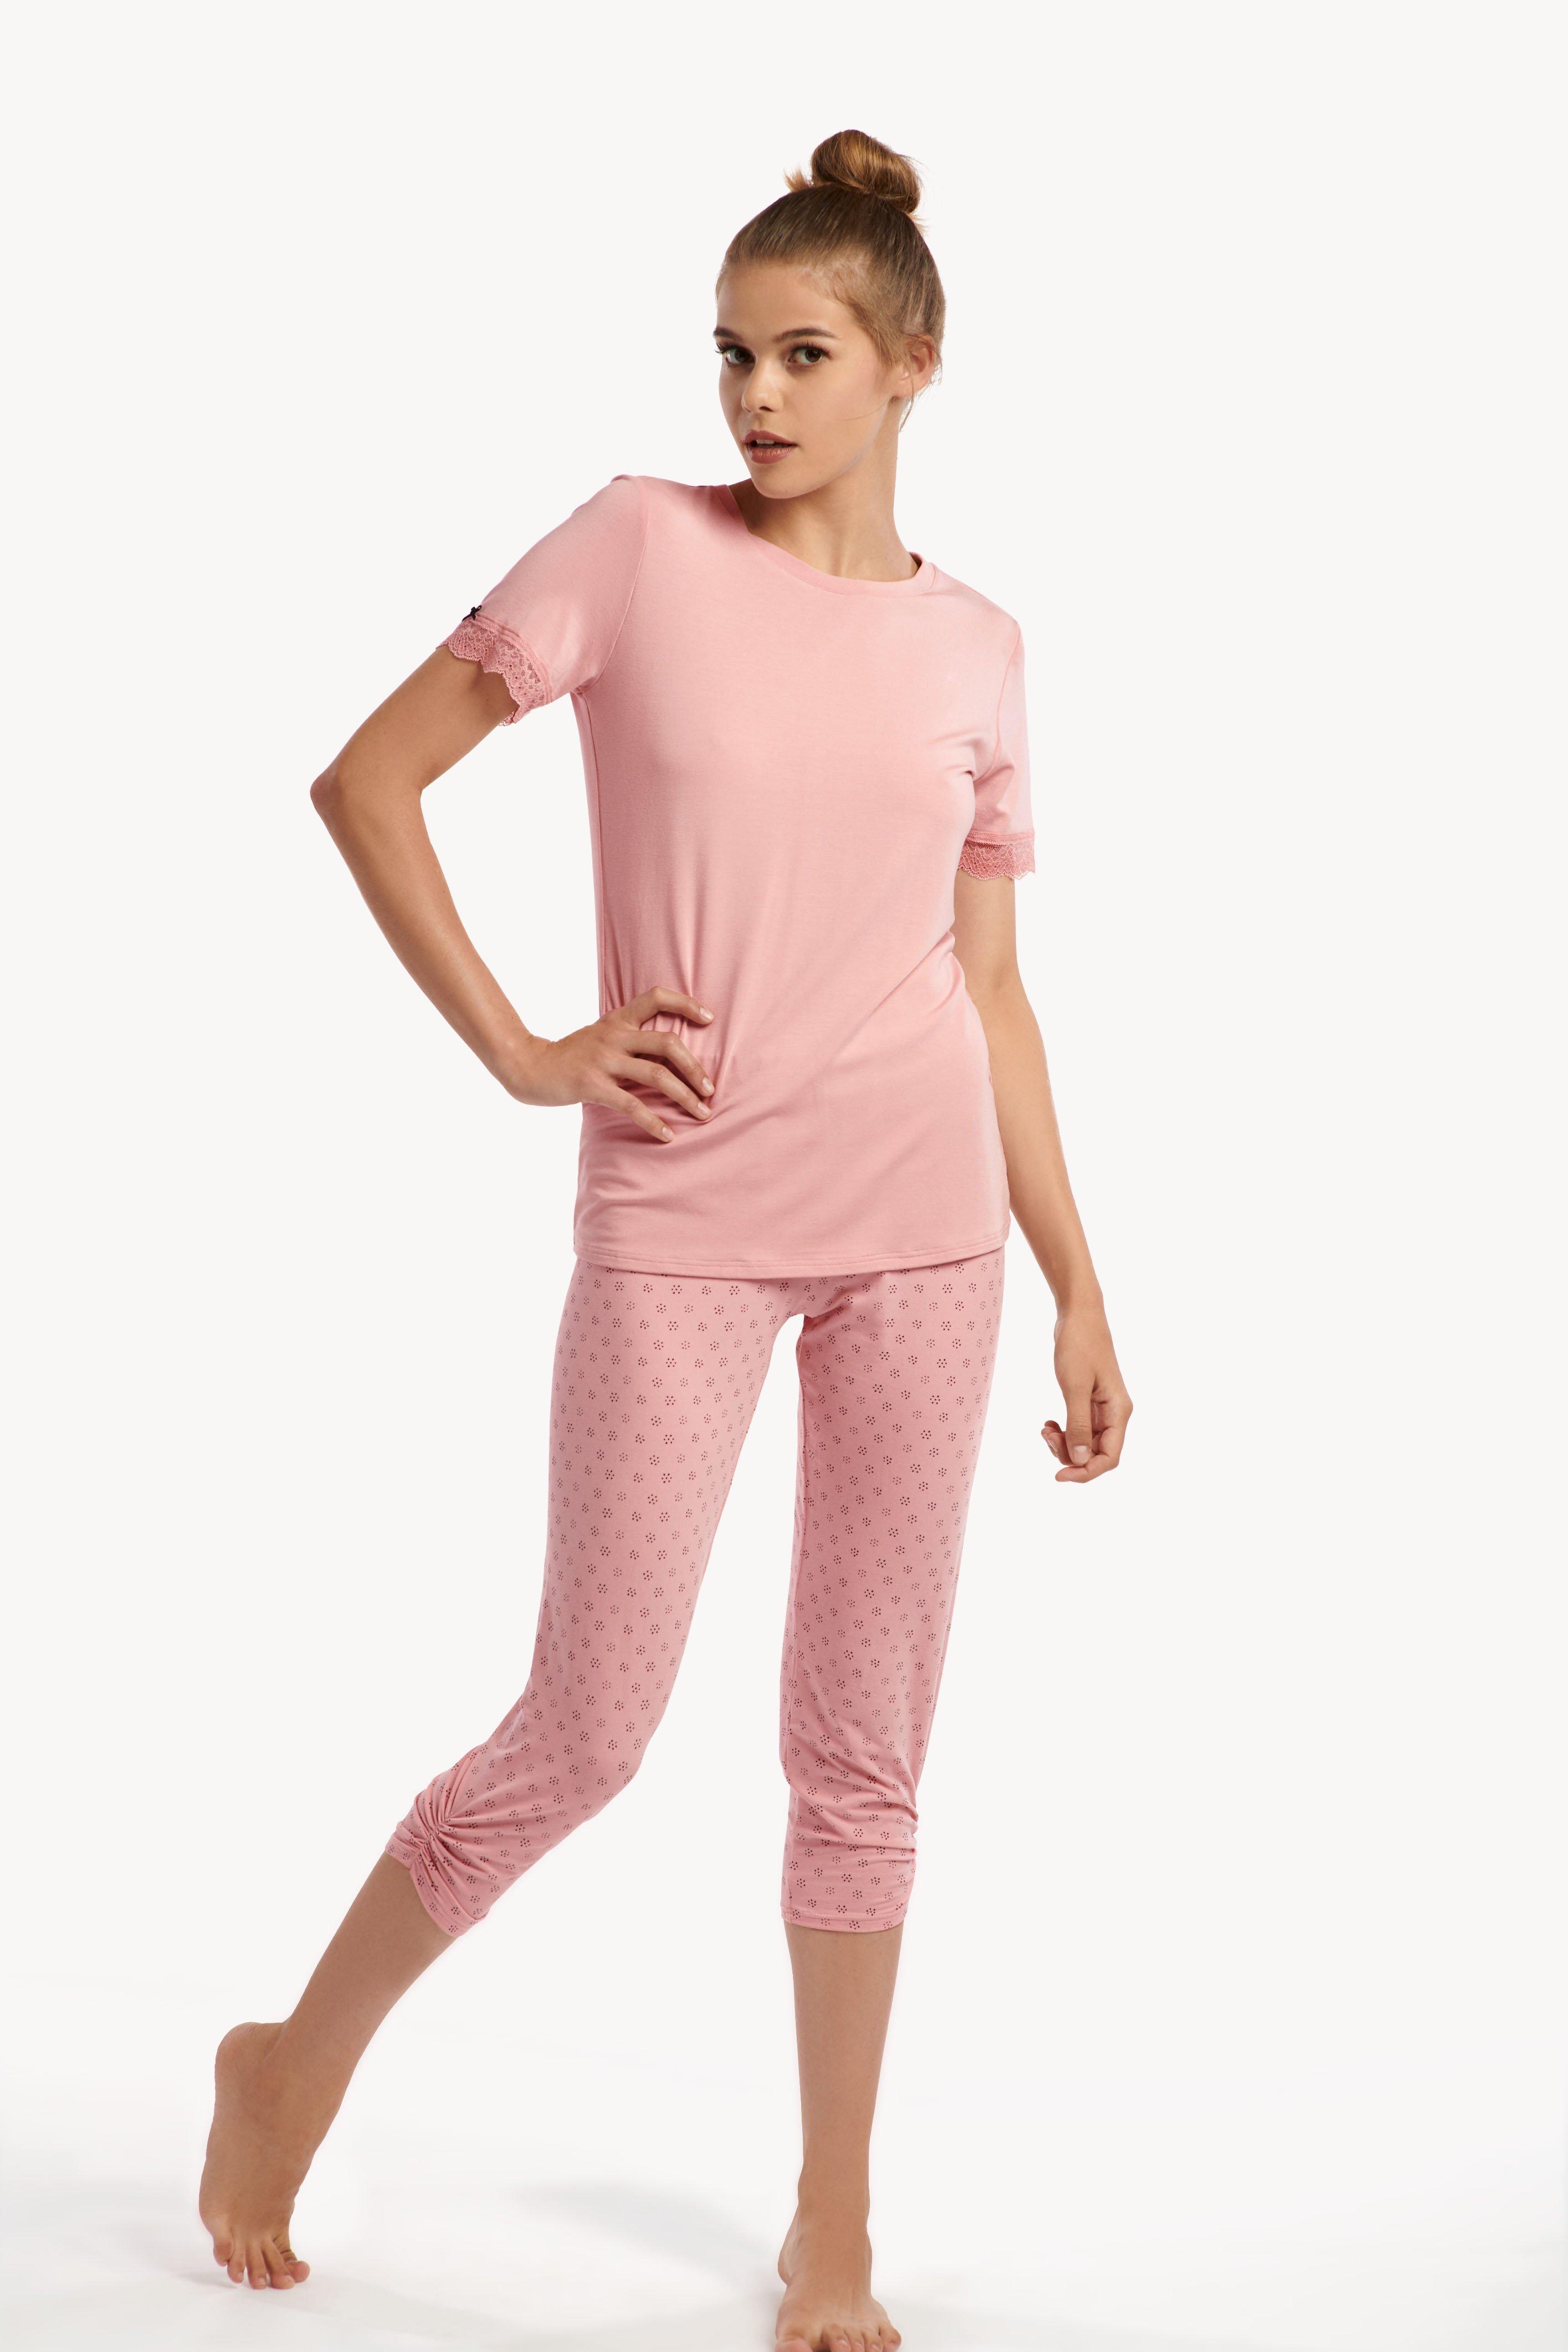 Cotton Blend 'Endless' Pyjama Short Sleeve Top and 3/4 Legging Set